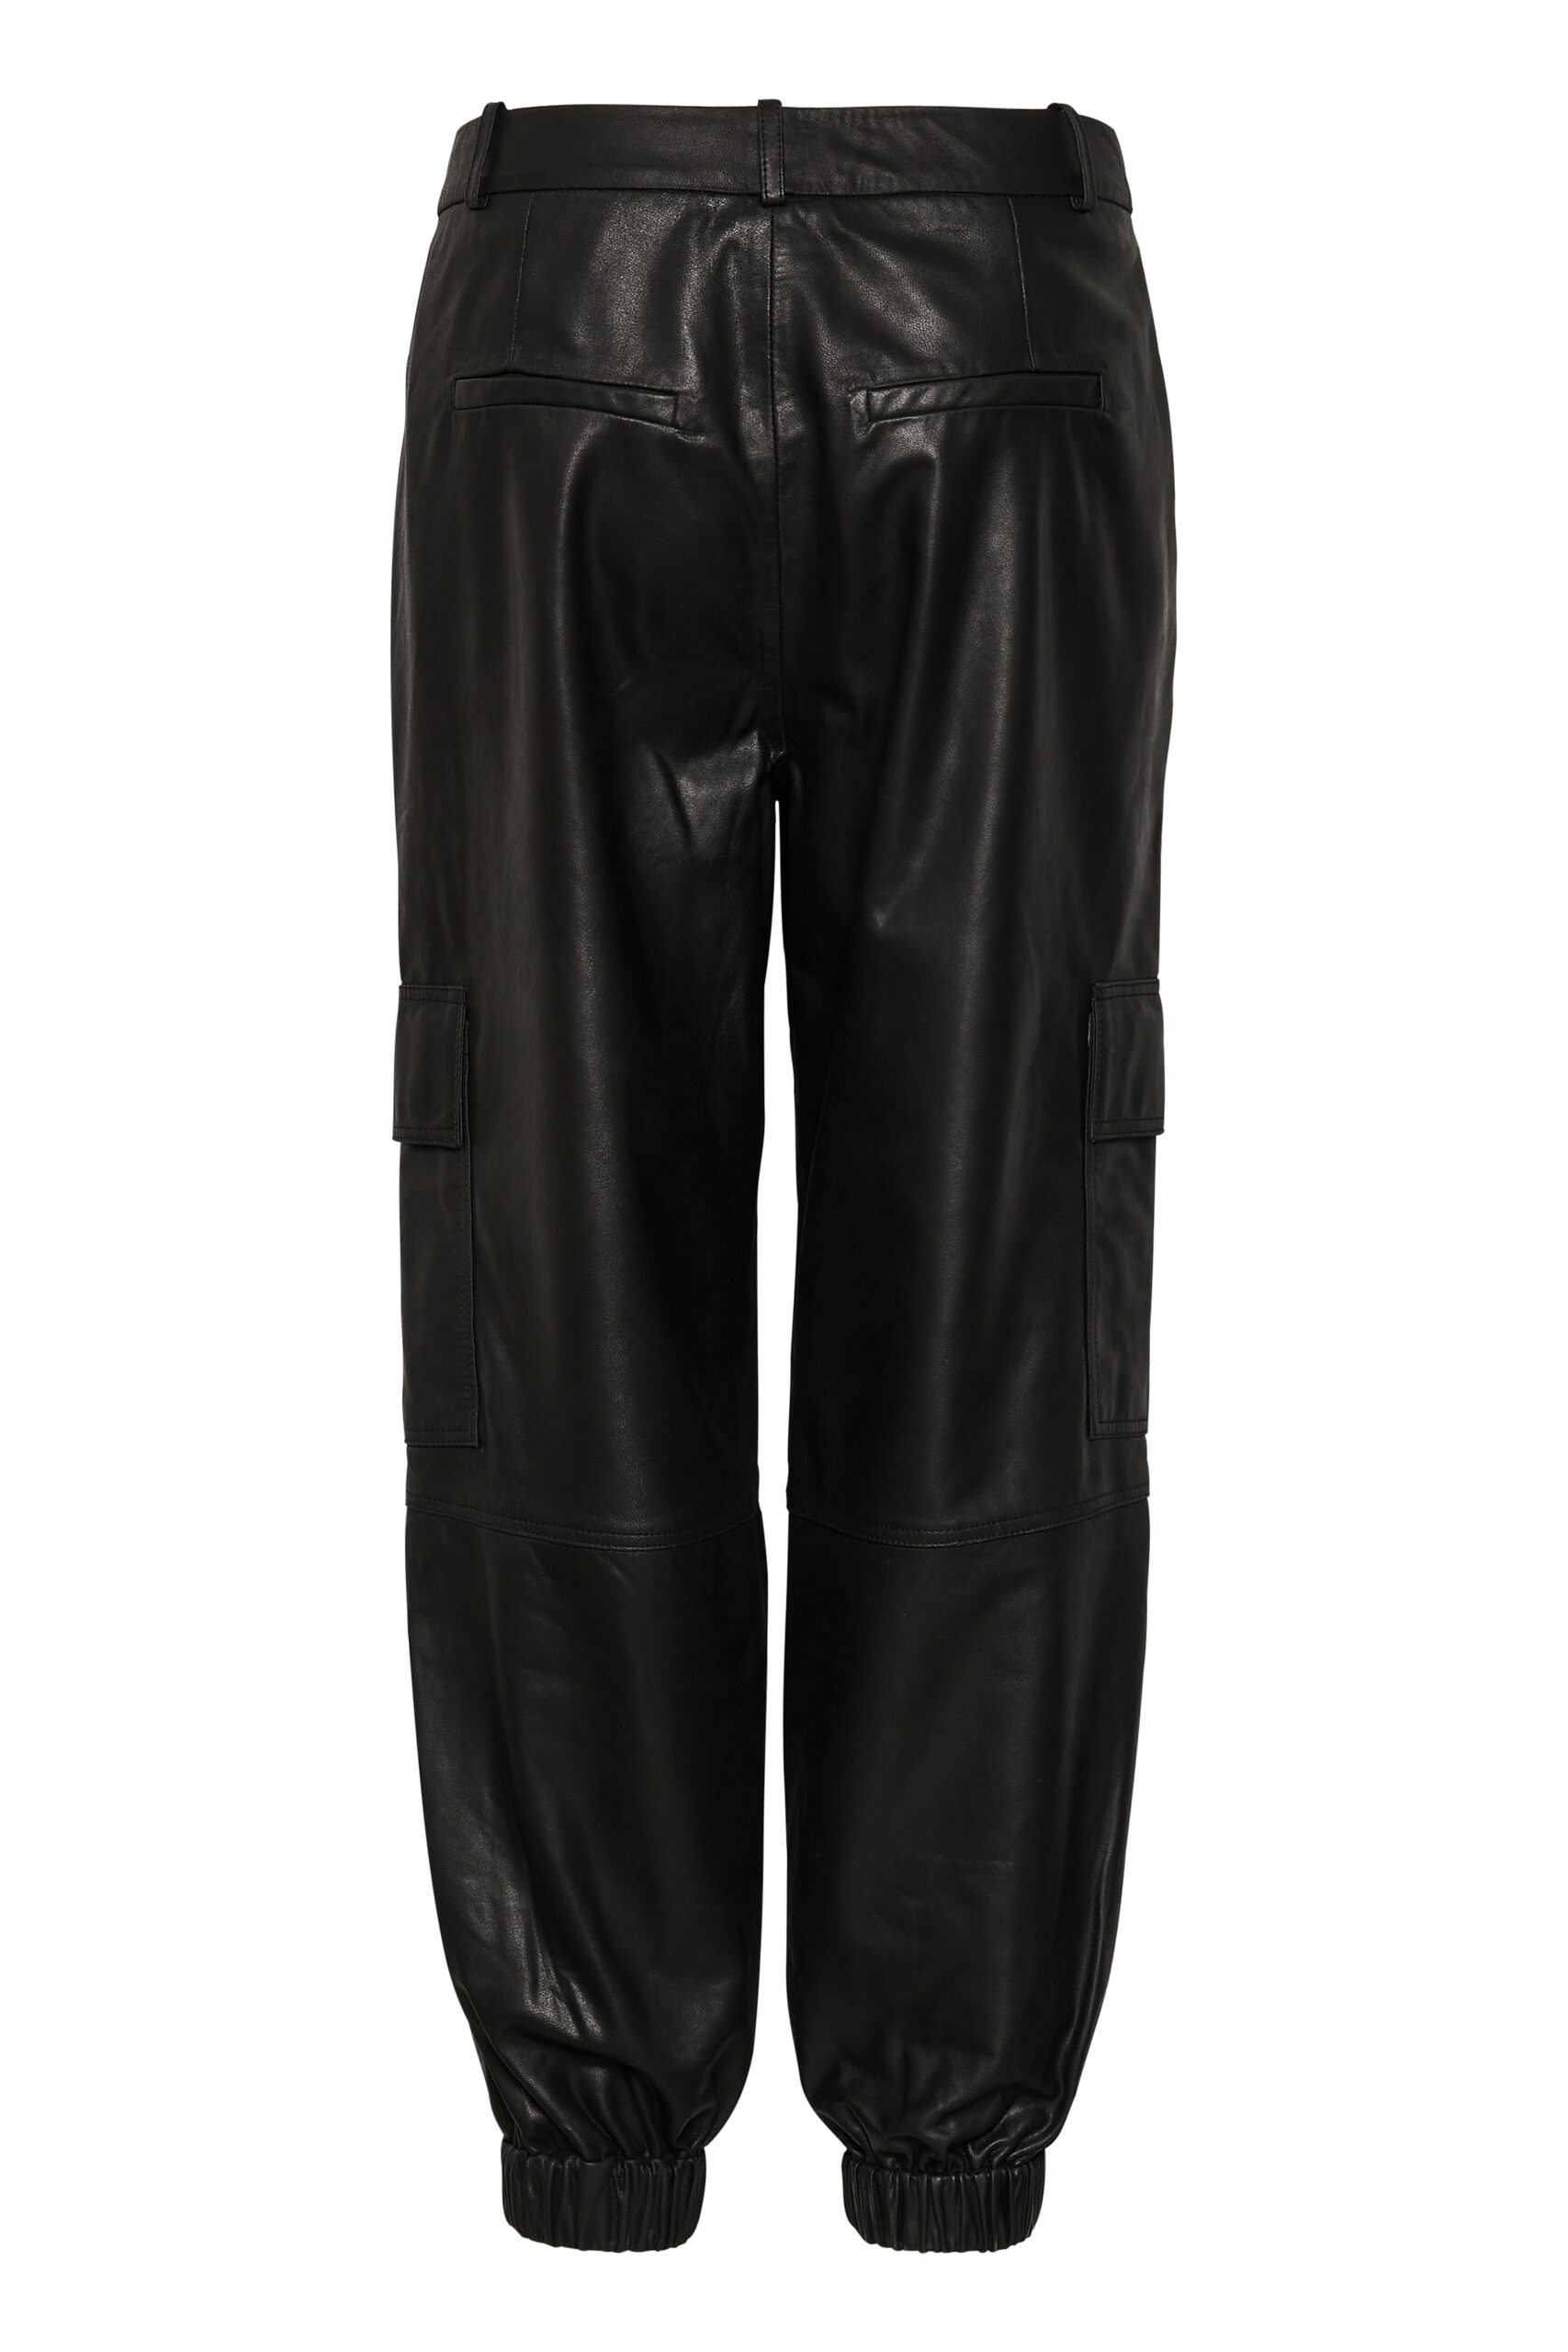 KAmalene Leather Pants item back